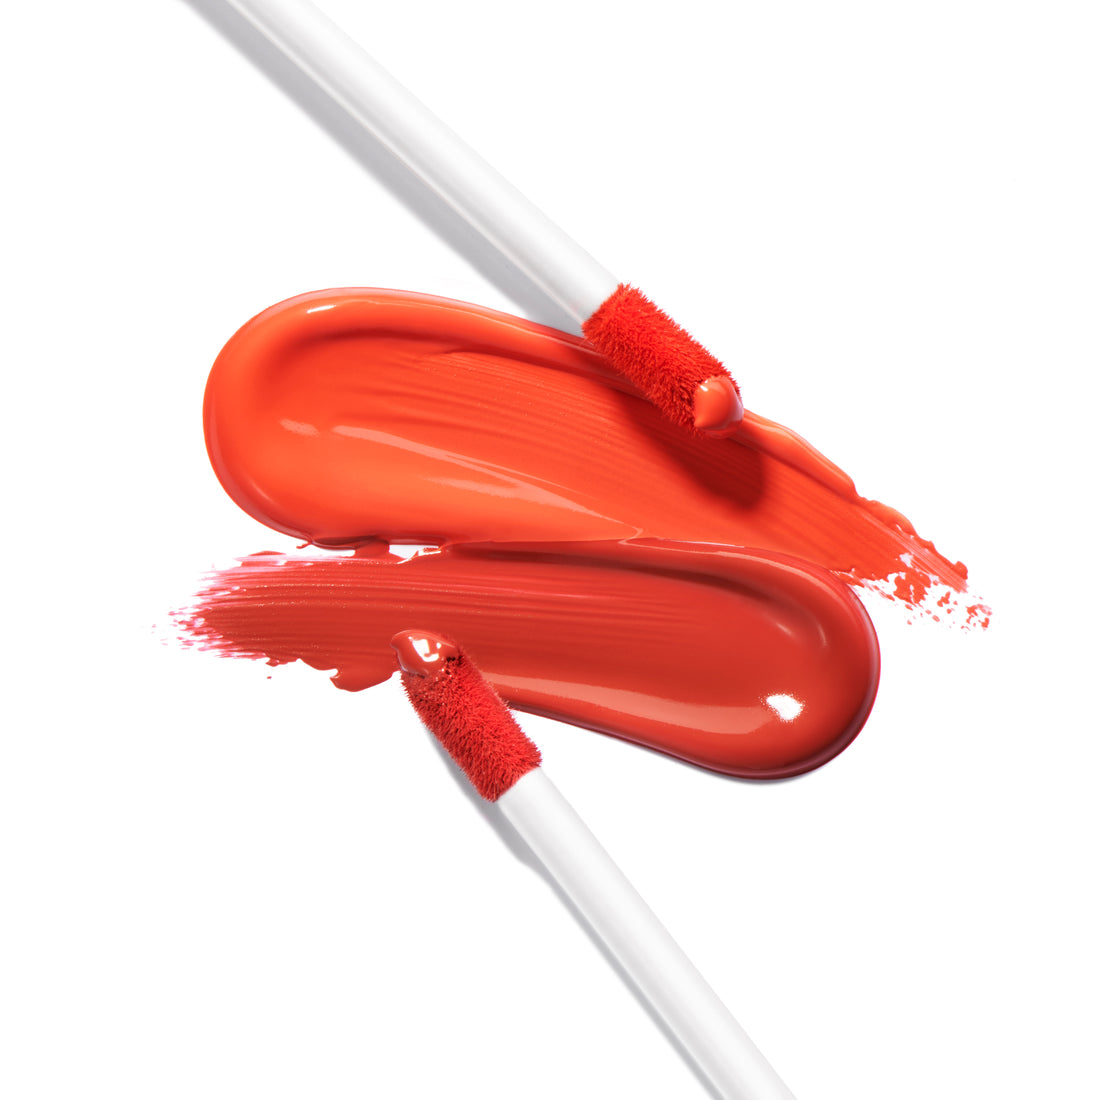 Celosia Velvet Matt Liquid Lipstick